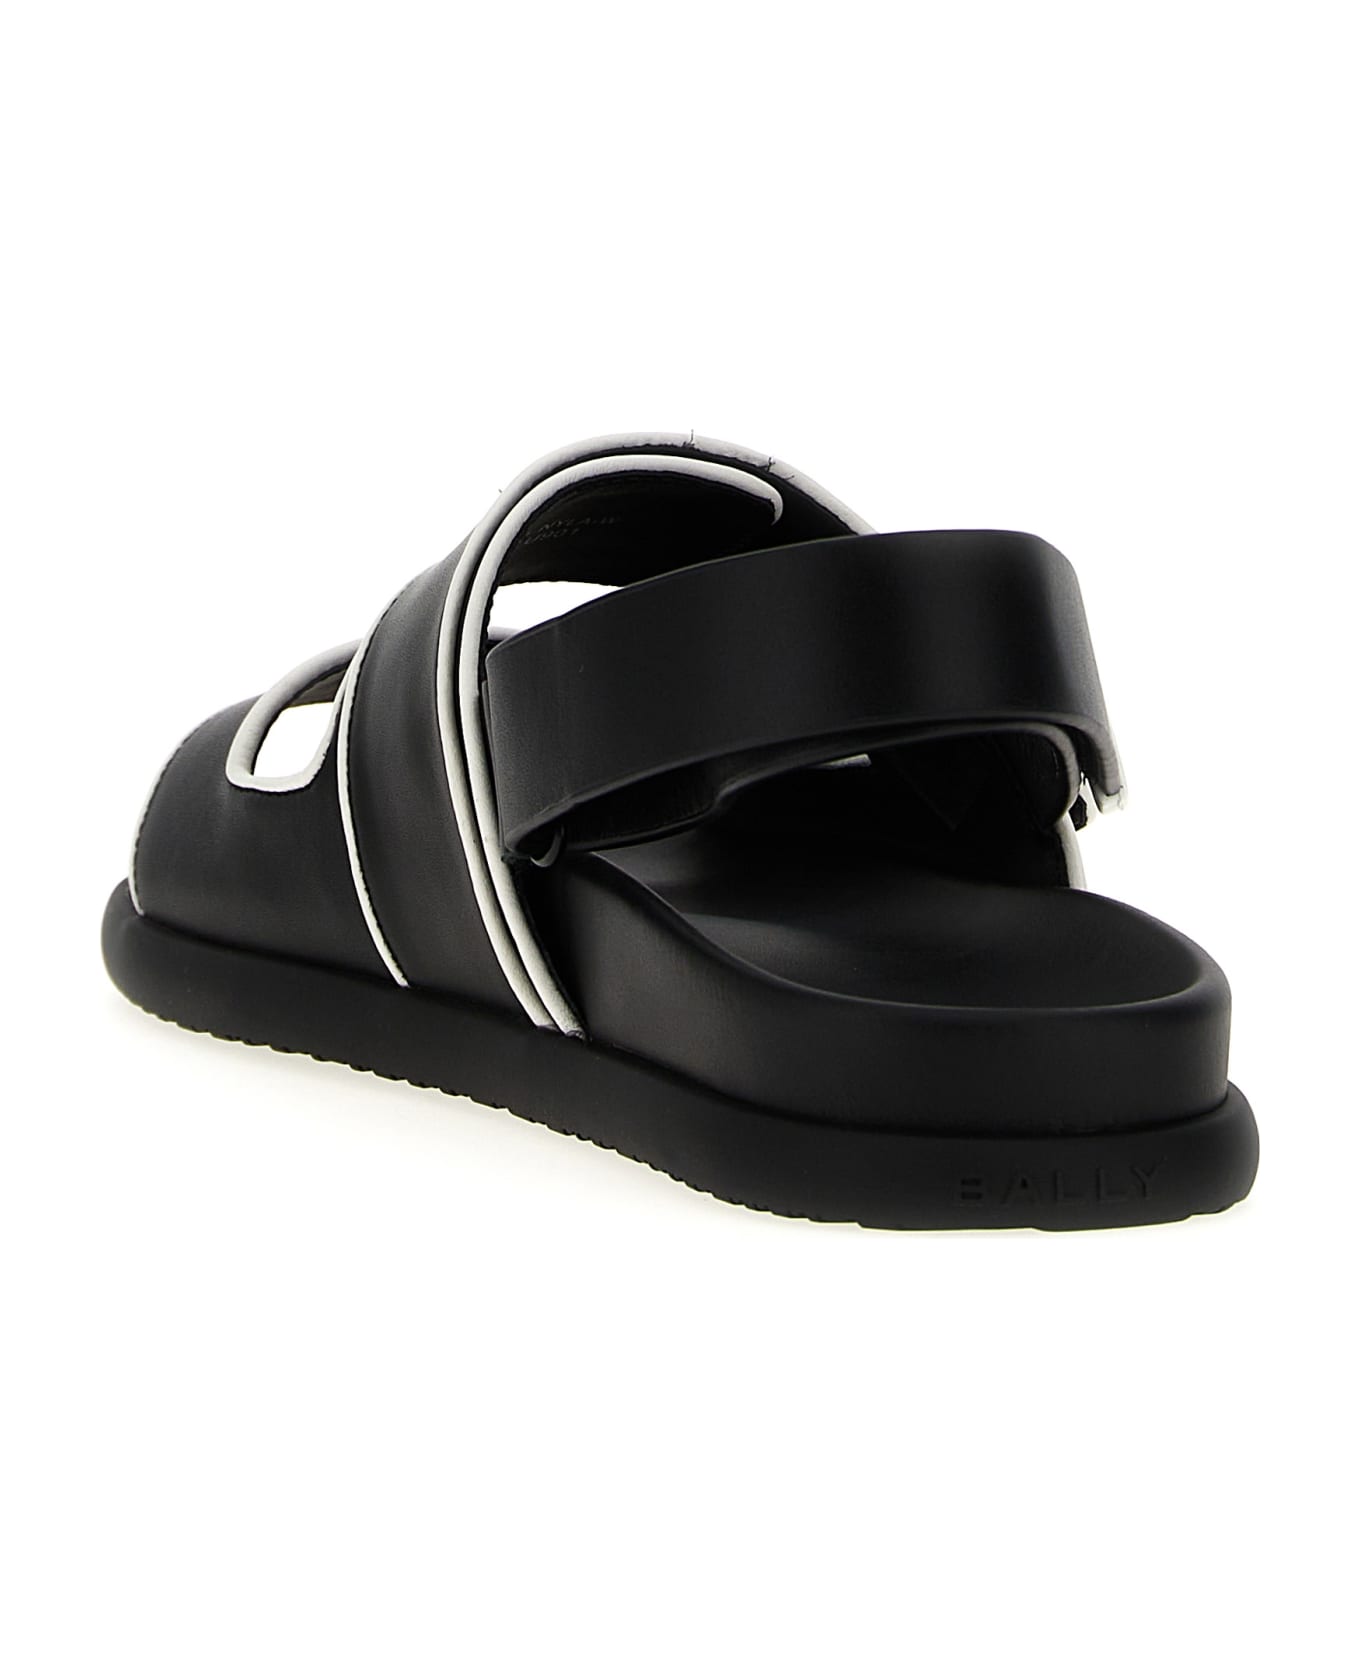 Bally 'nyla' Sandals - White/Black